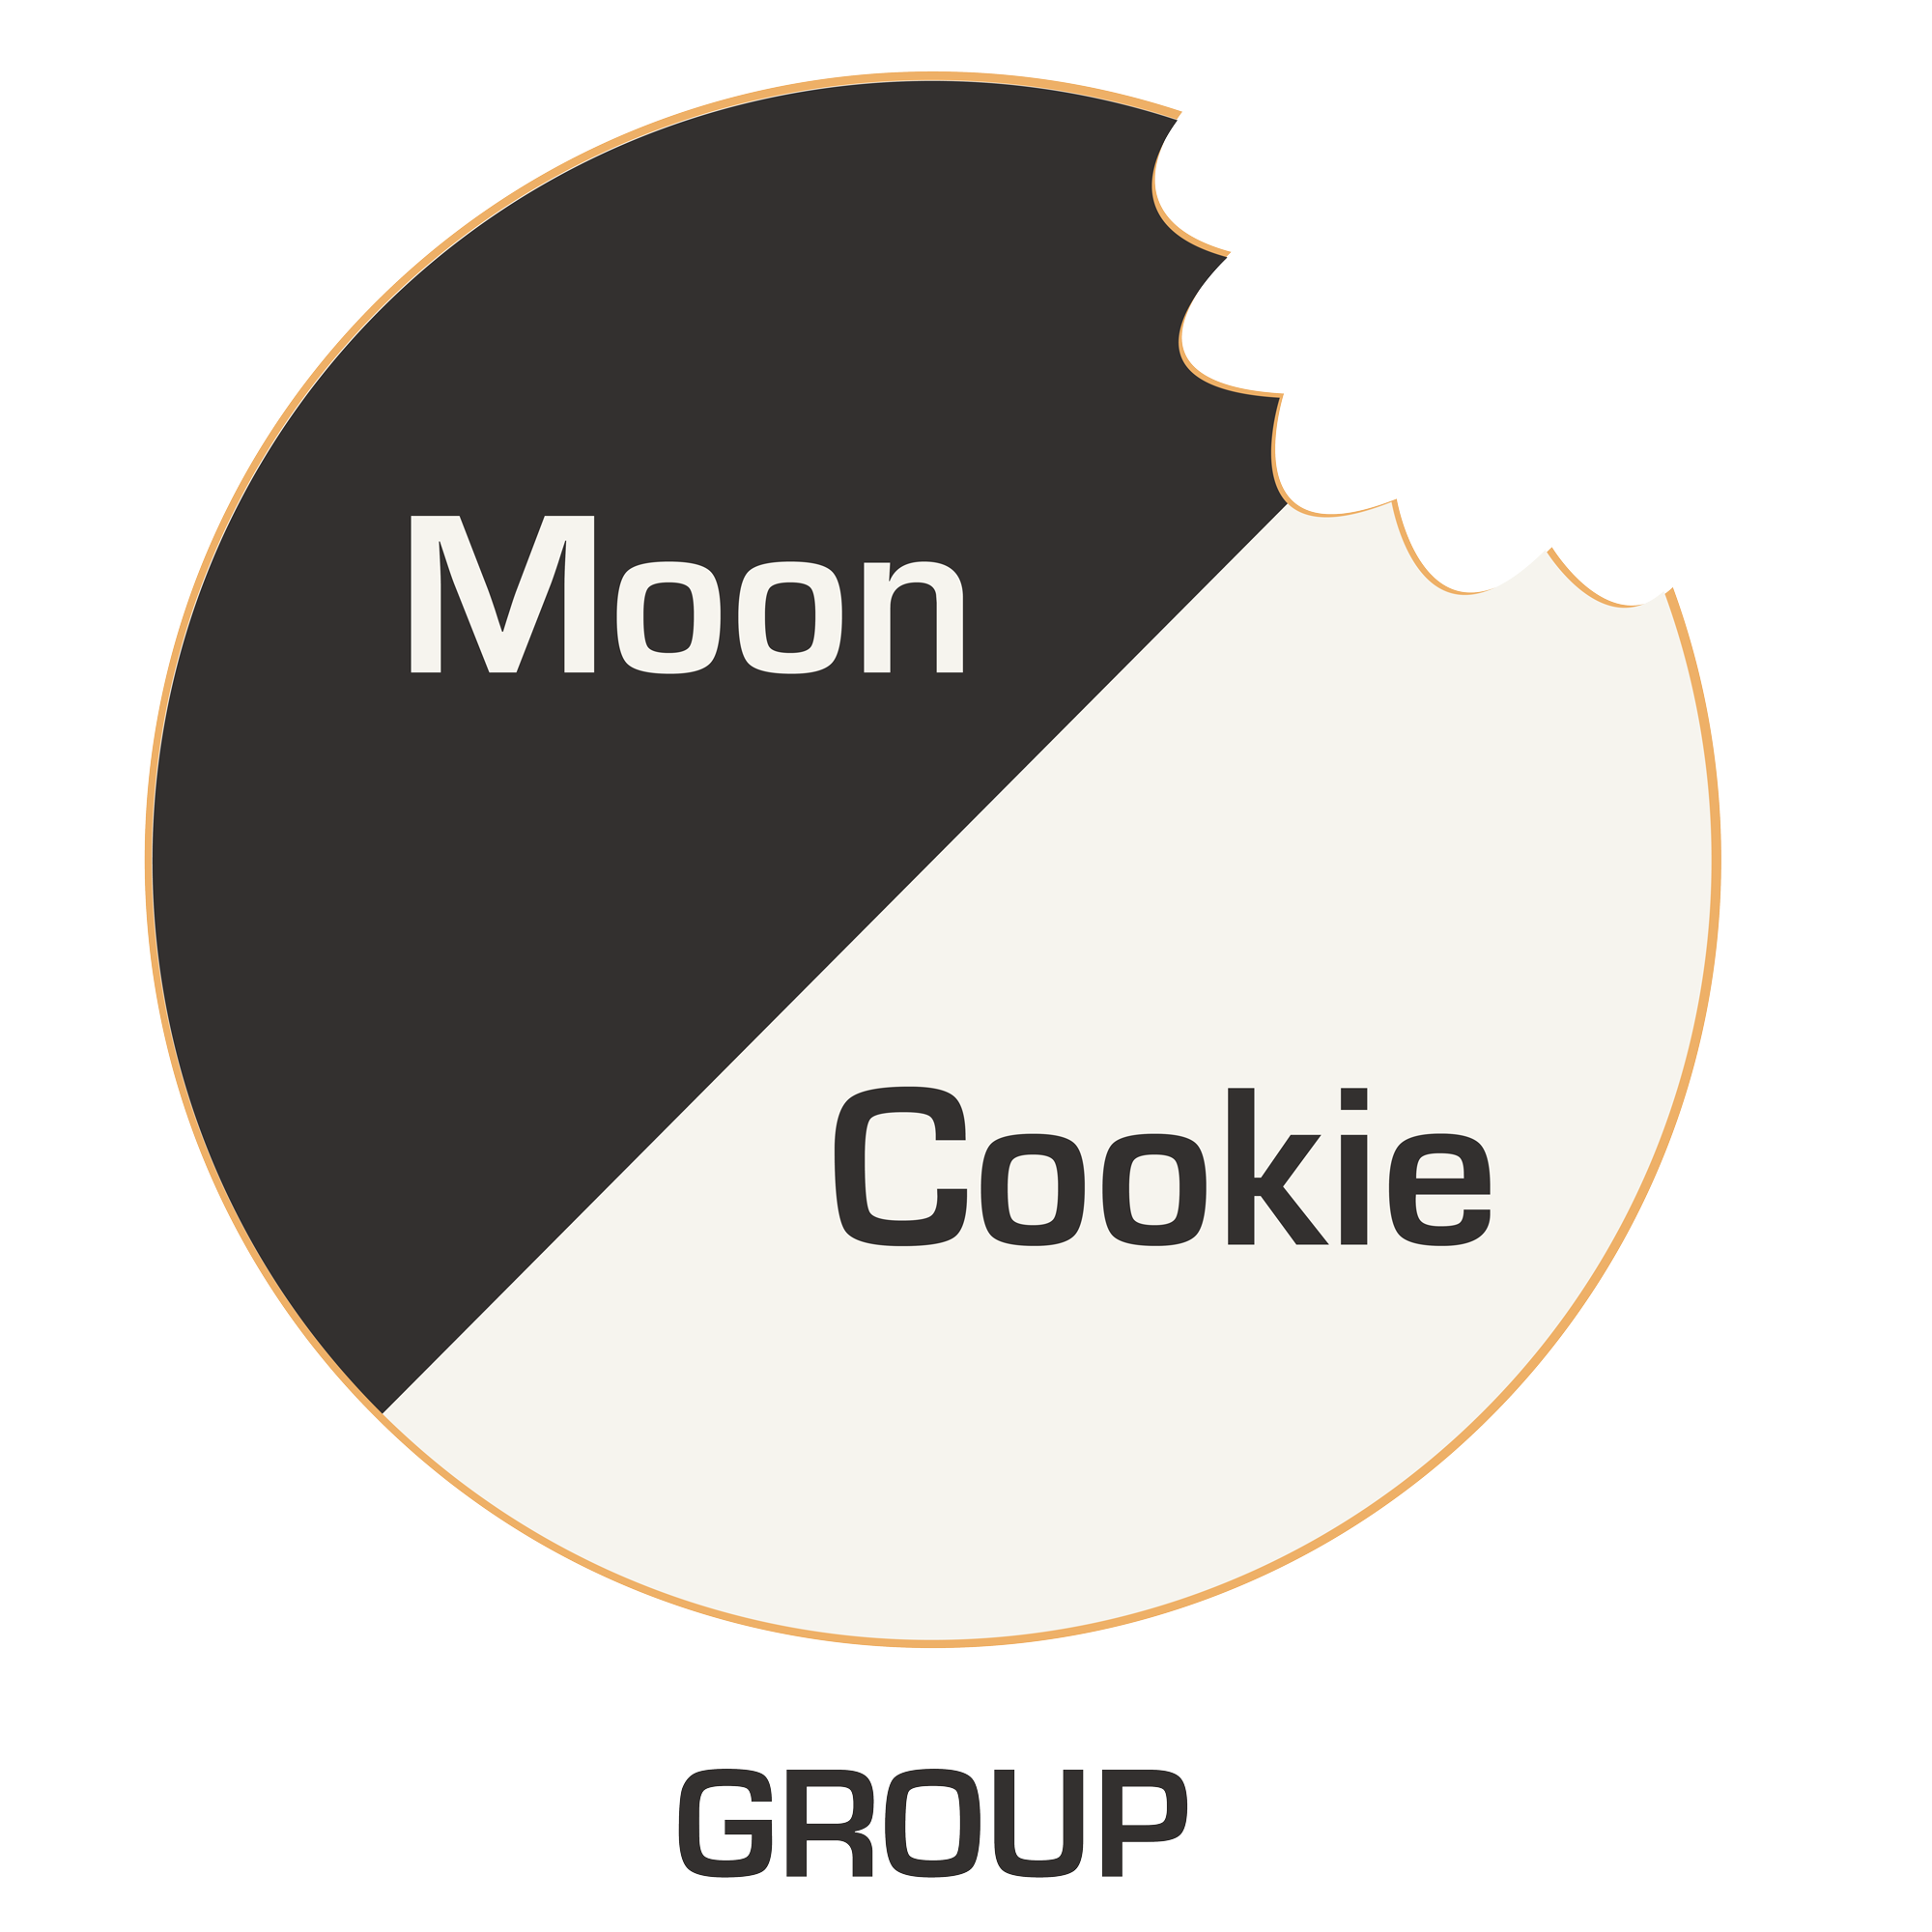 Moon Cookie Group